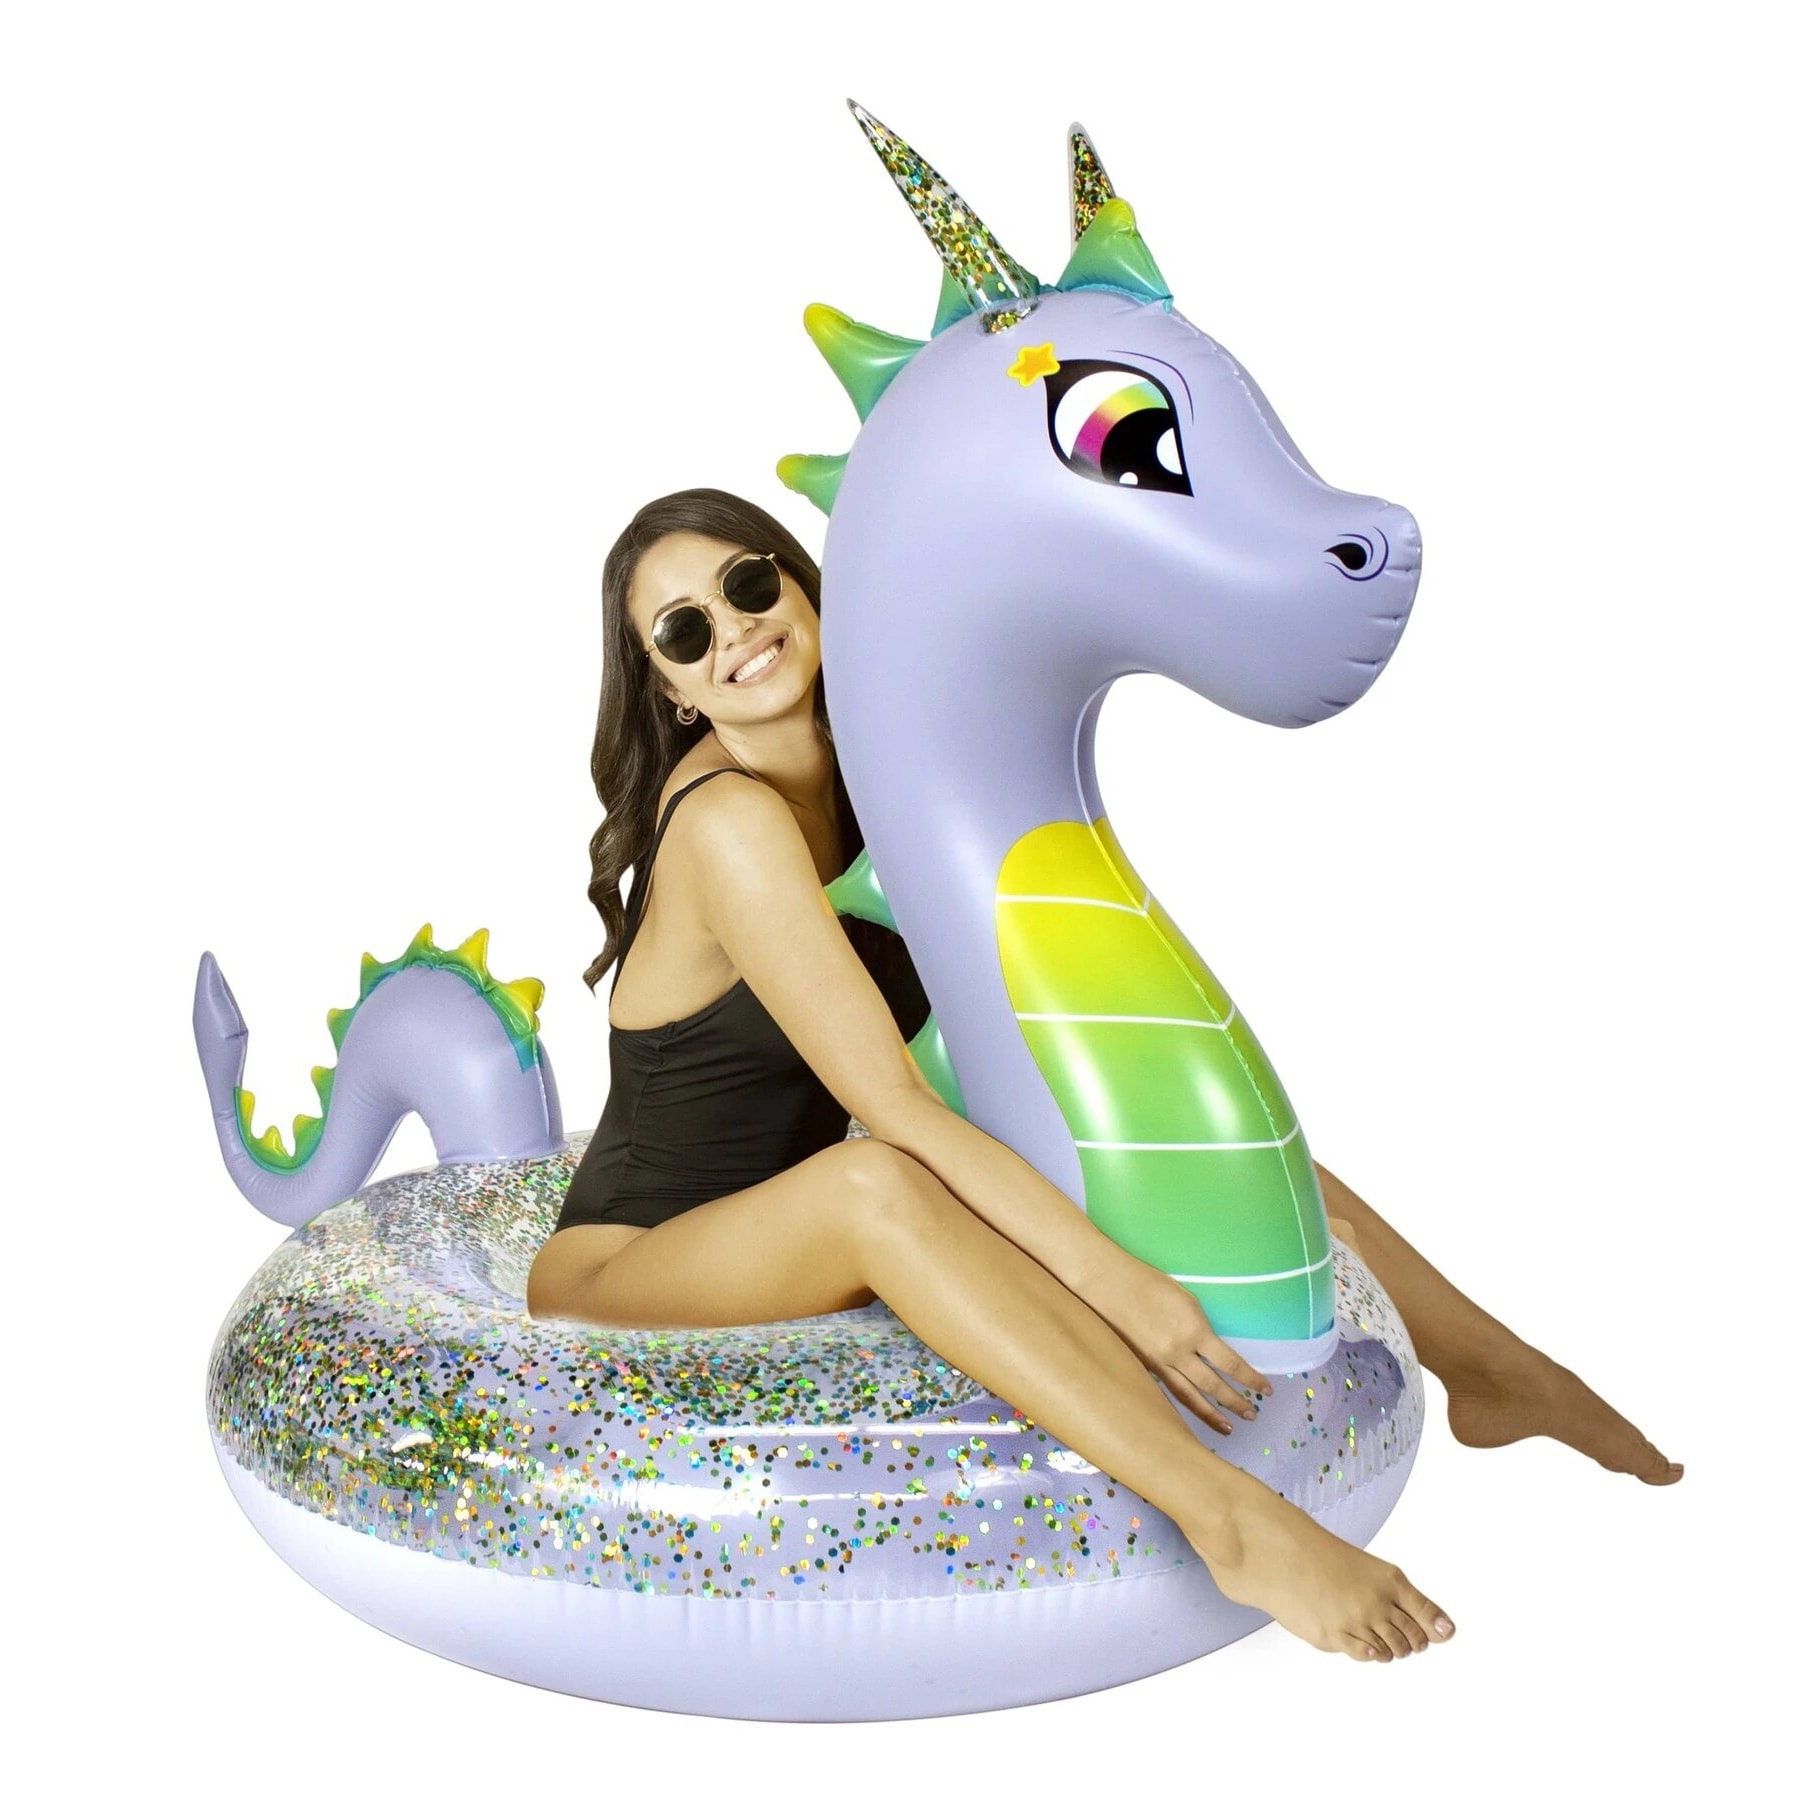 Poolcandy Inflatable Glitter Animal Collection Jumbo Pool Float Summer Pool Raft Lounge for Adults /& Kids Dragon